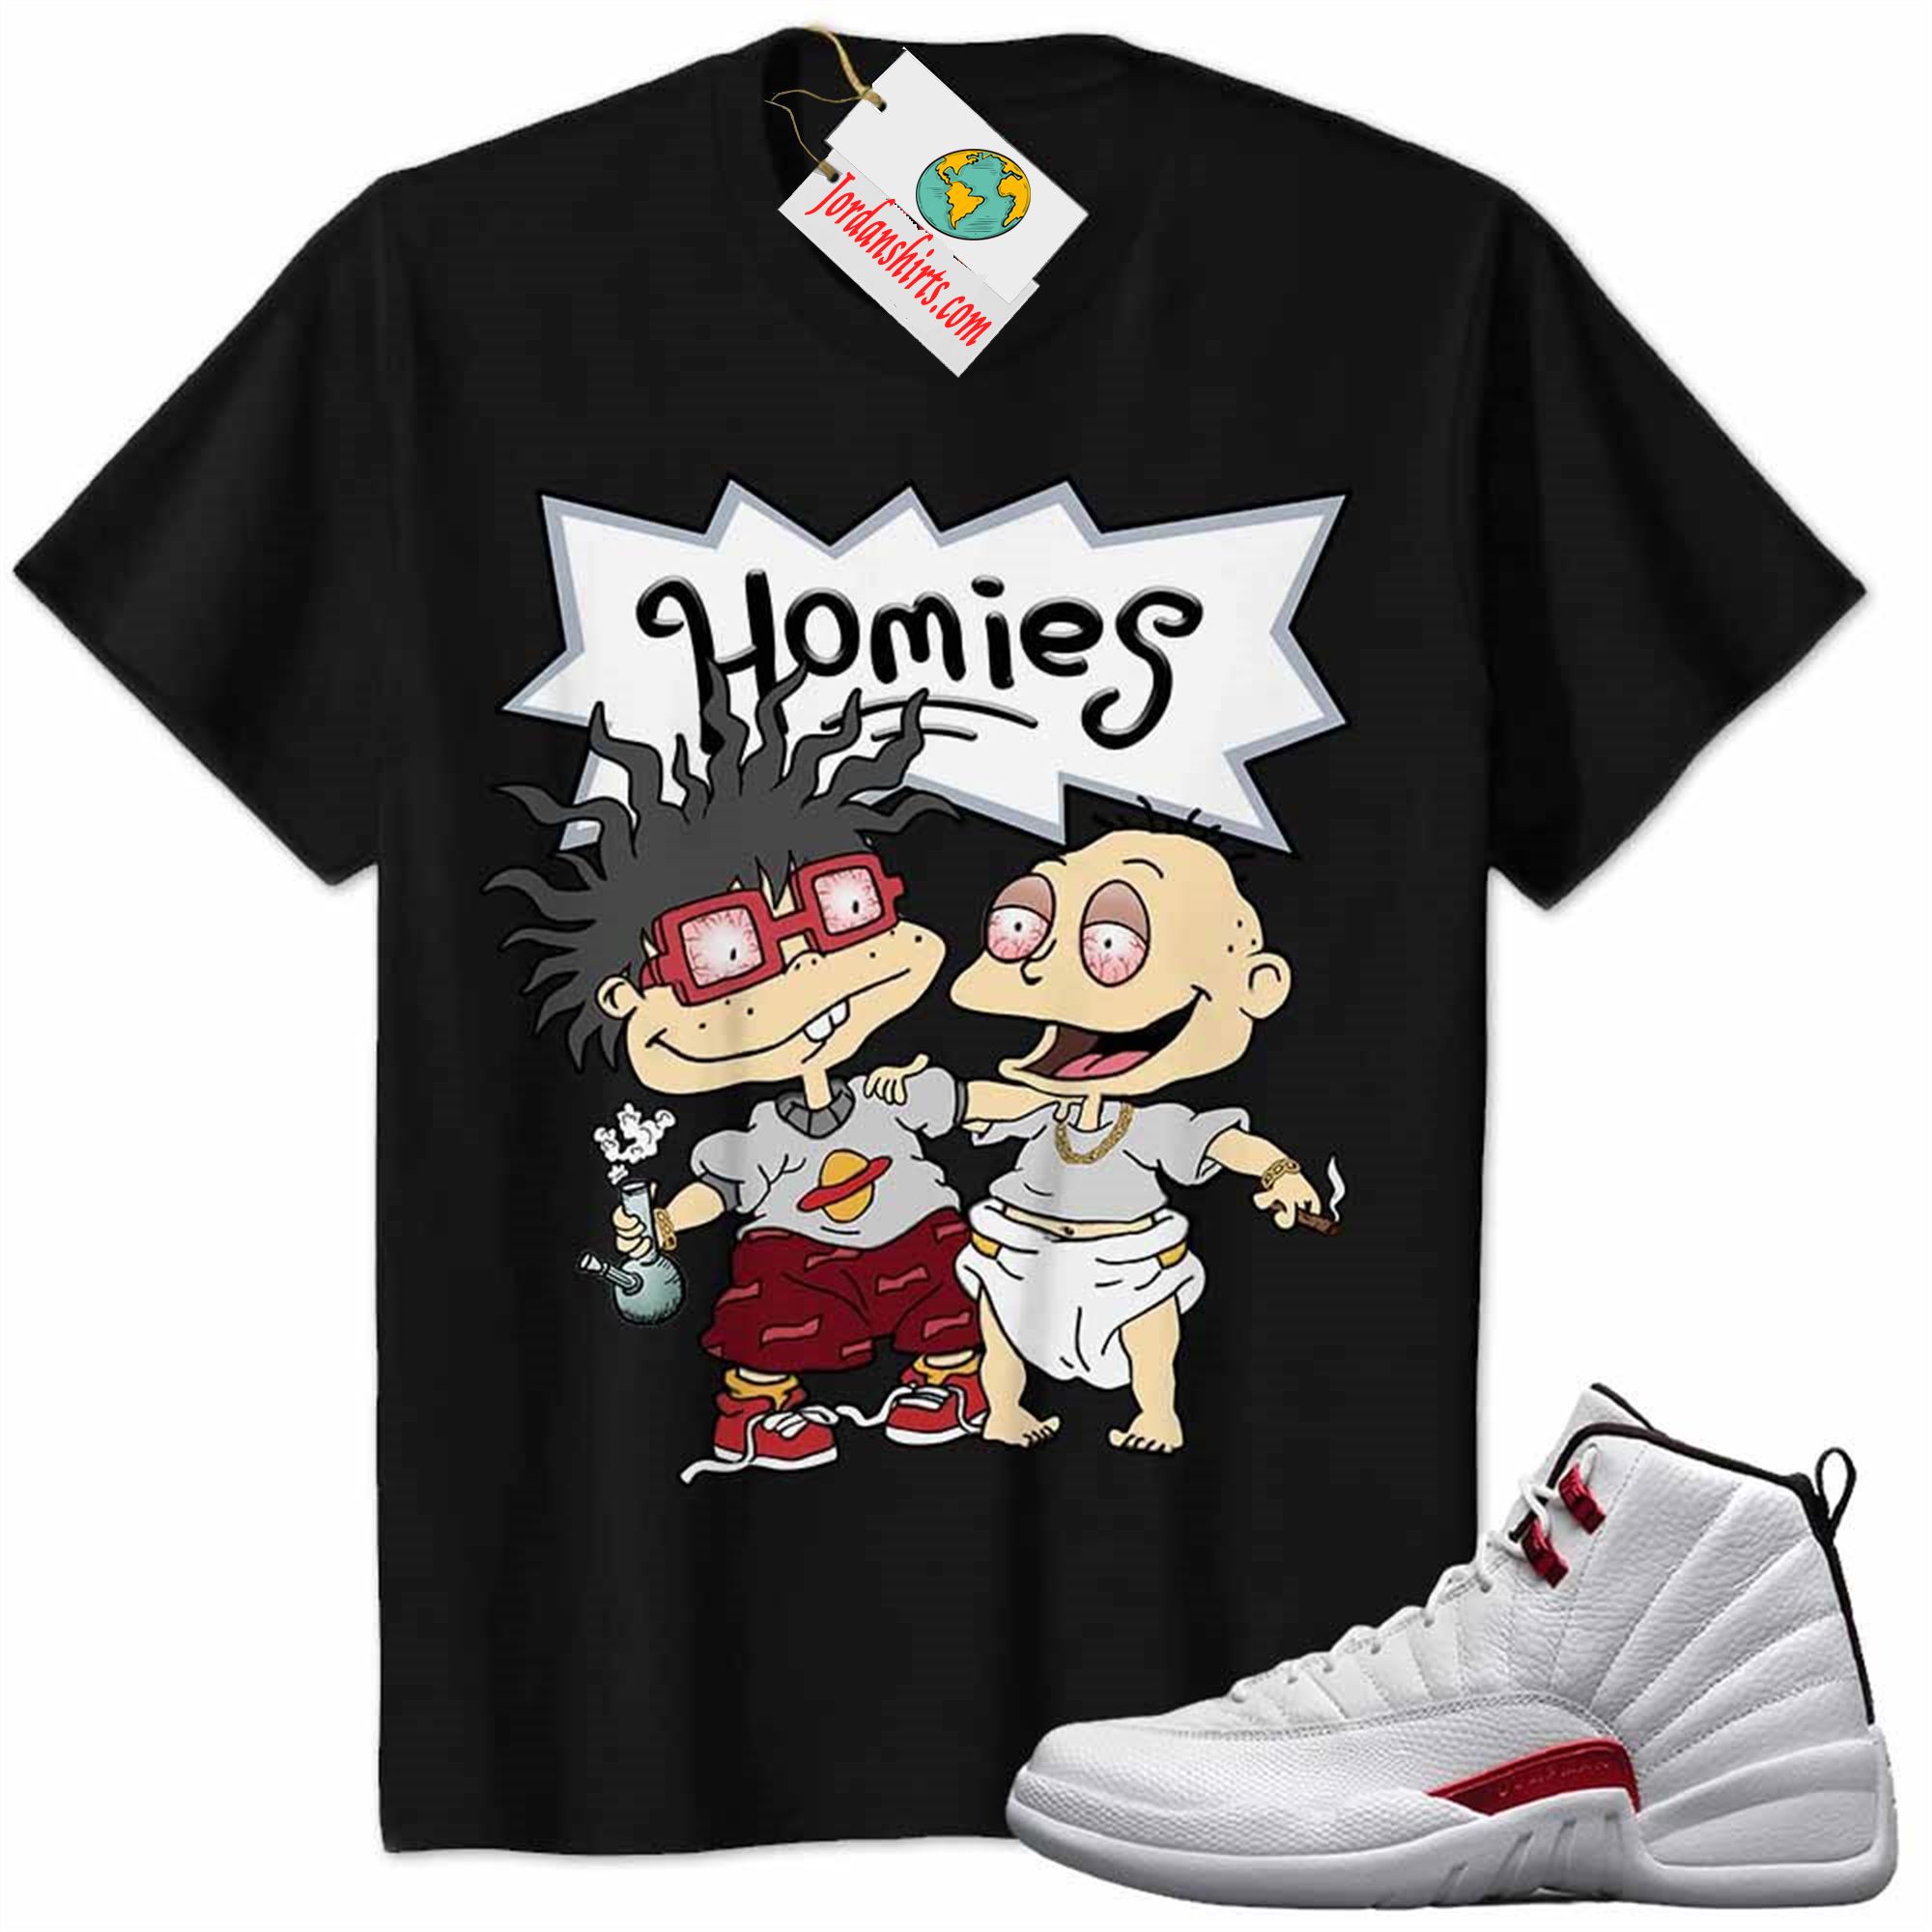 Jordan 12 Shirt, Jordan 12 Twist Shirt Hommies Tommy Pickles Chuckie Finster Rugrats Black Size Up To 5xl